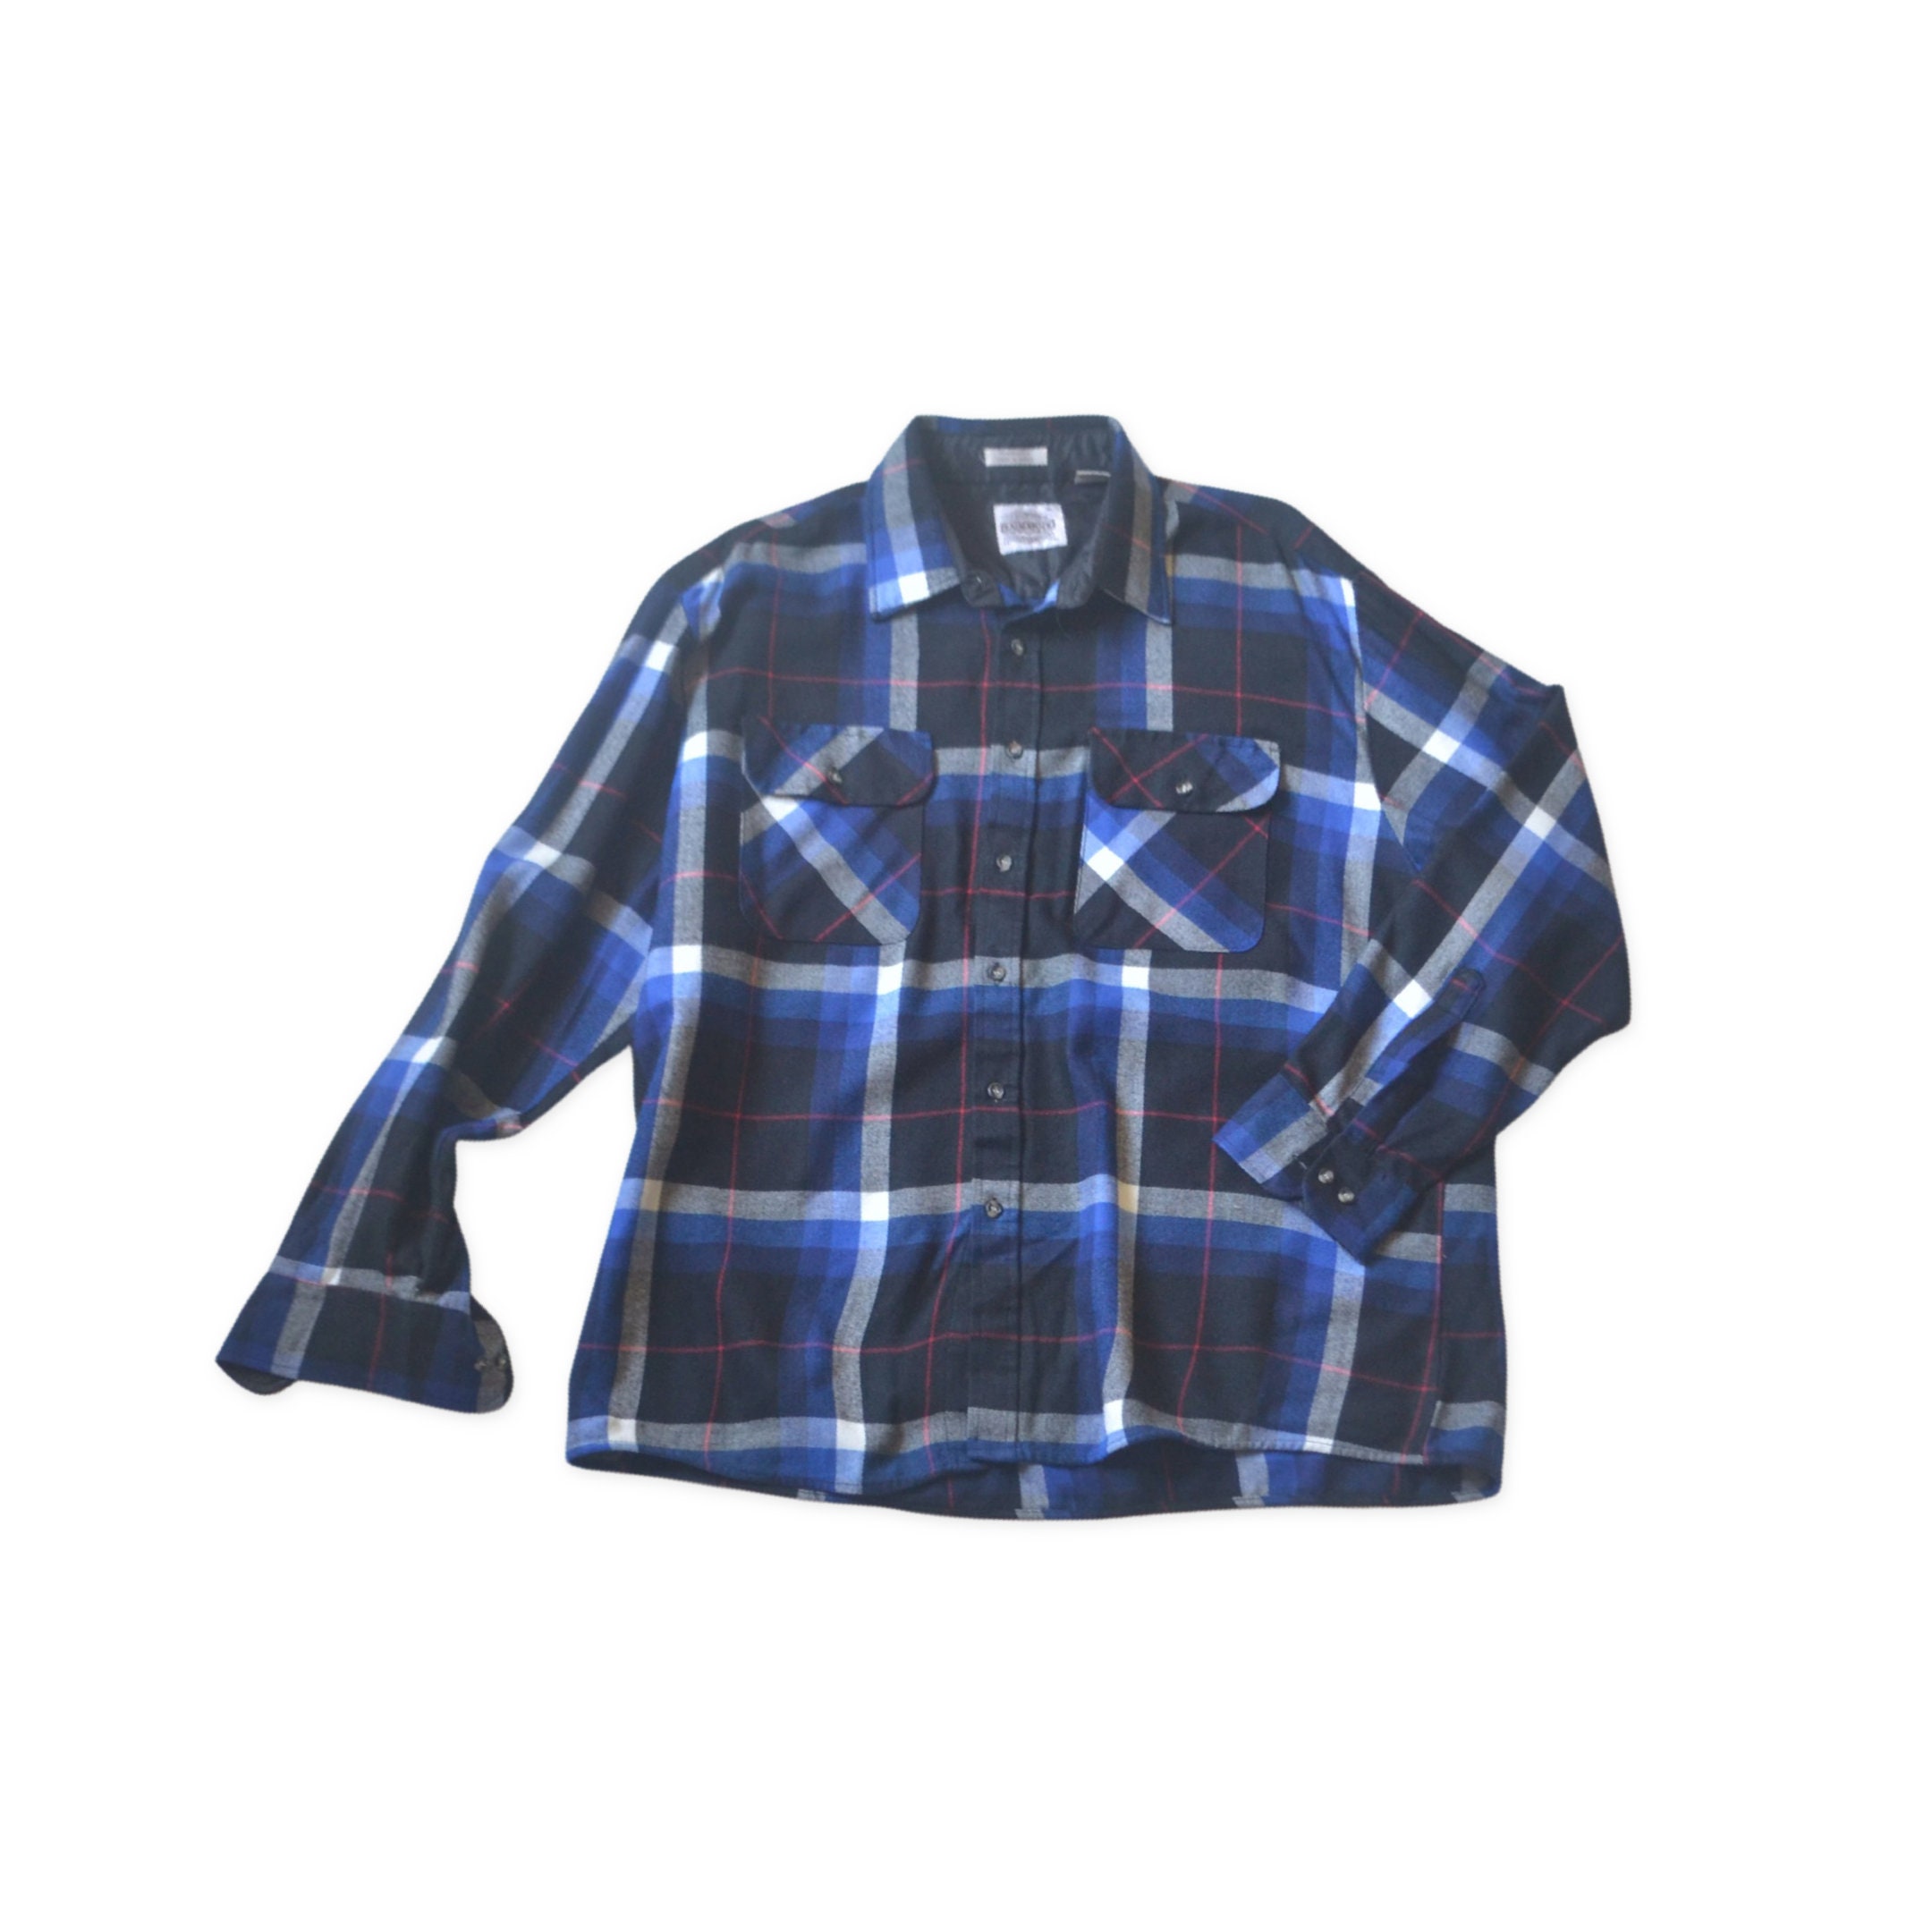 Vintage Men's Plaid Lumberjack Shirt // Blue and Black Plaid Oxford ...